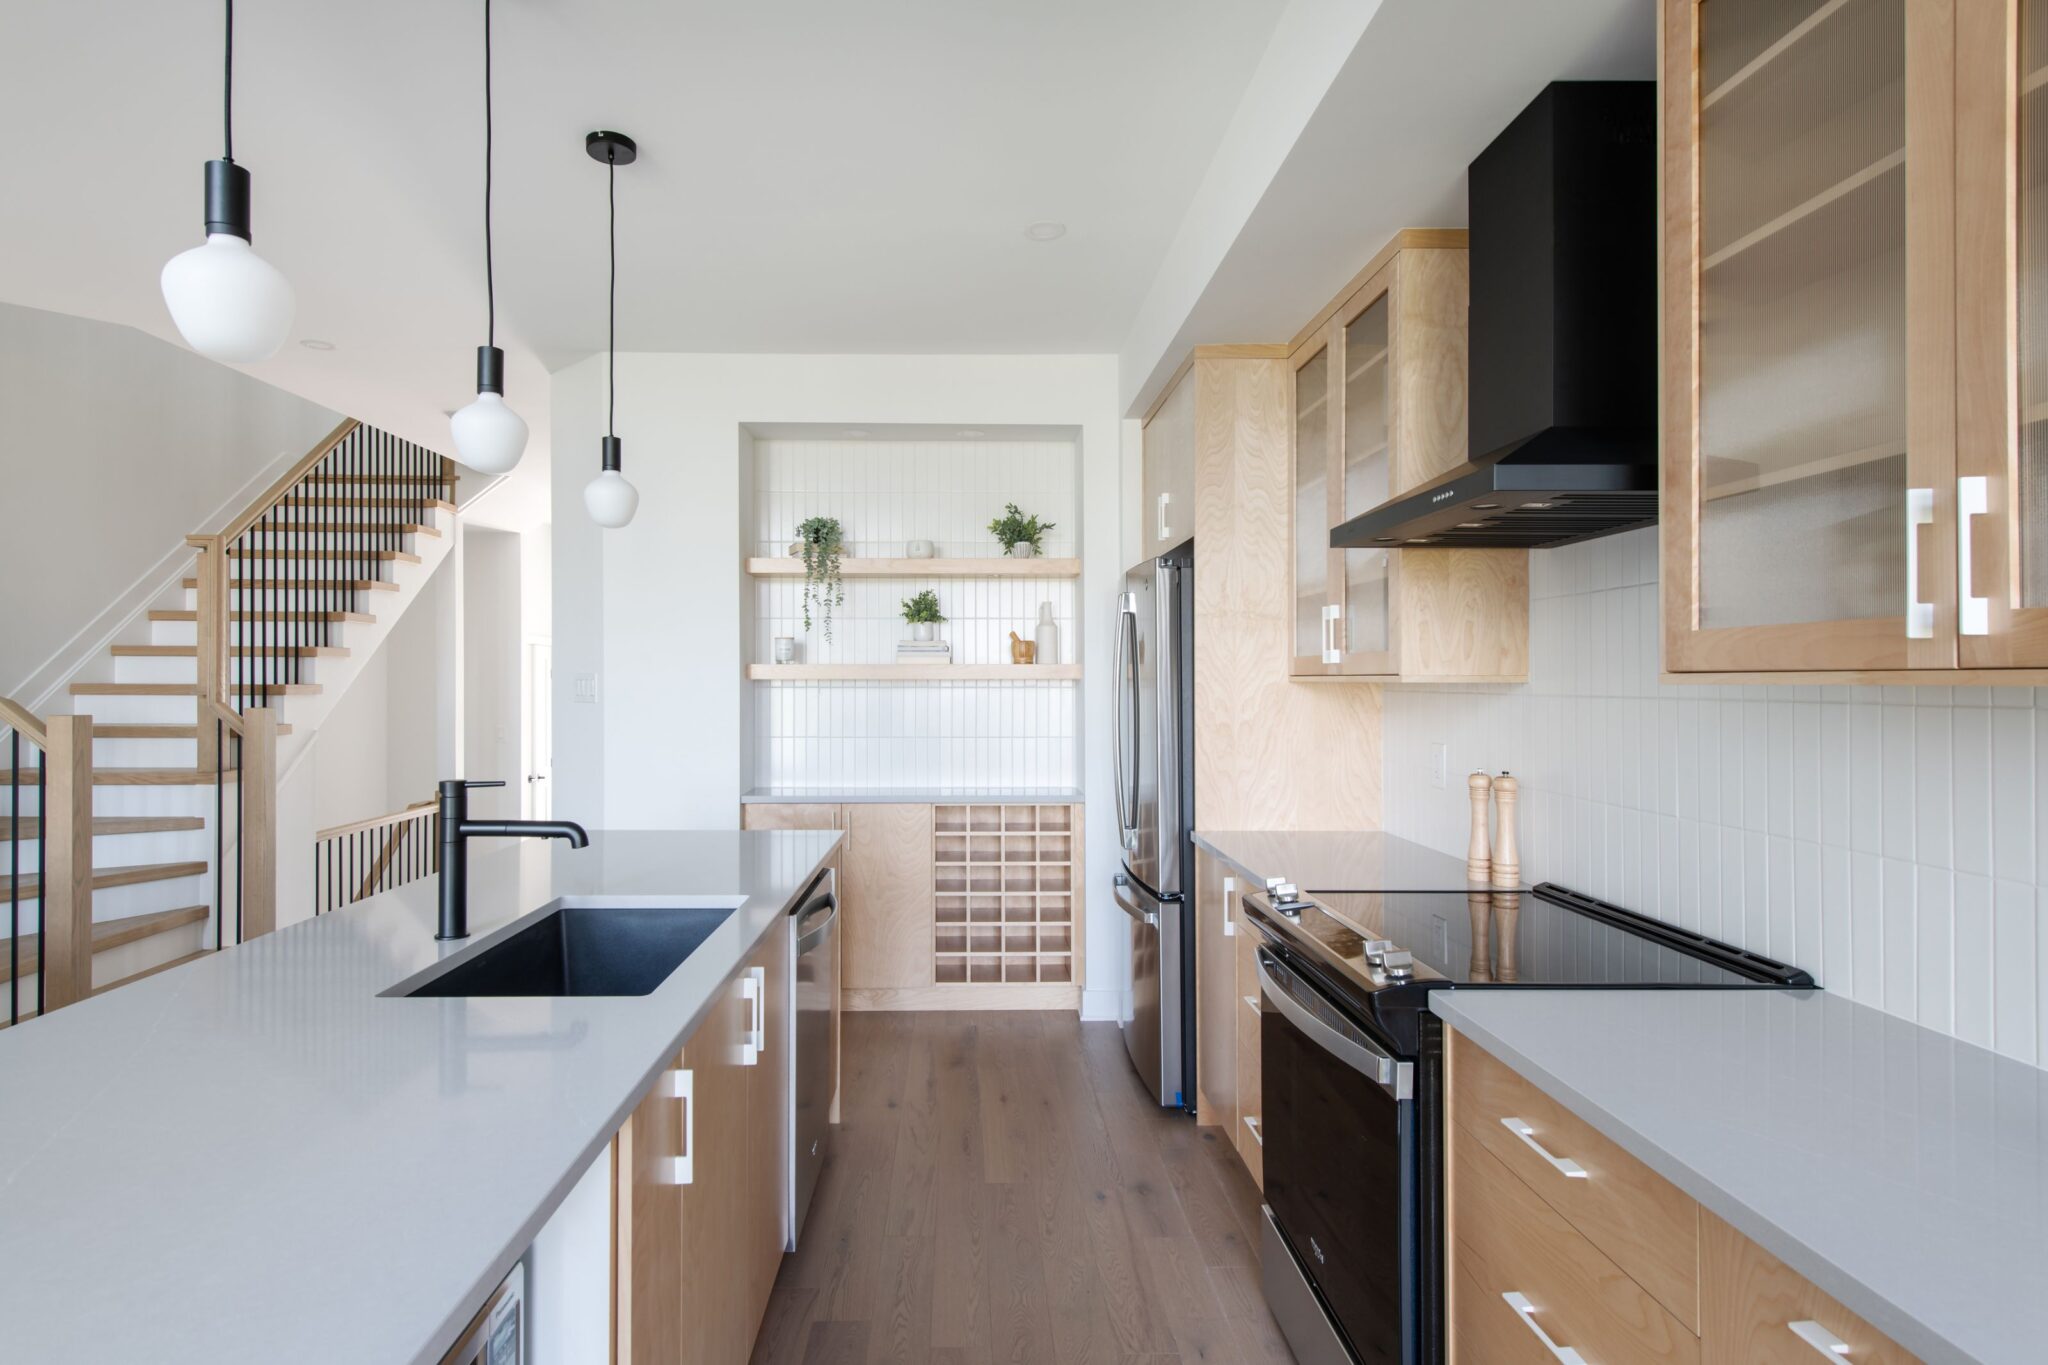 bradley commons models urbandale construction ottawa new homes kitchen wood cabinets